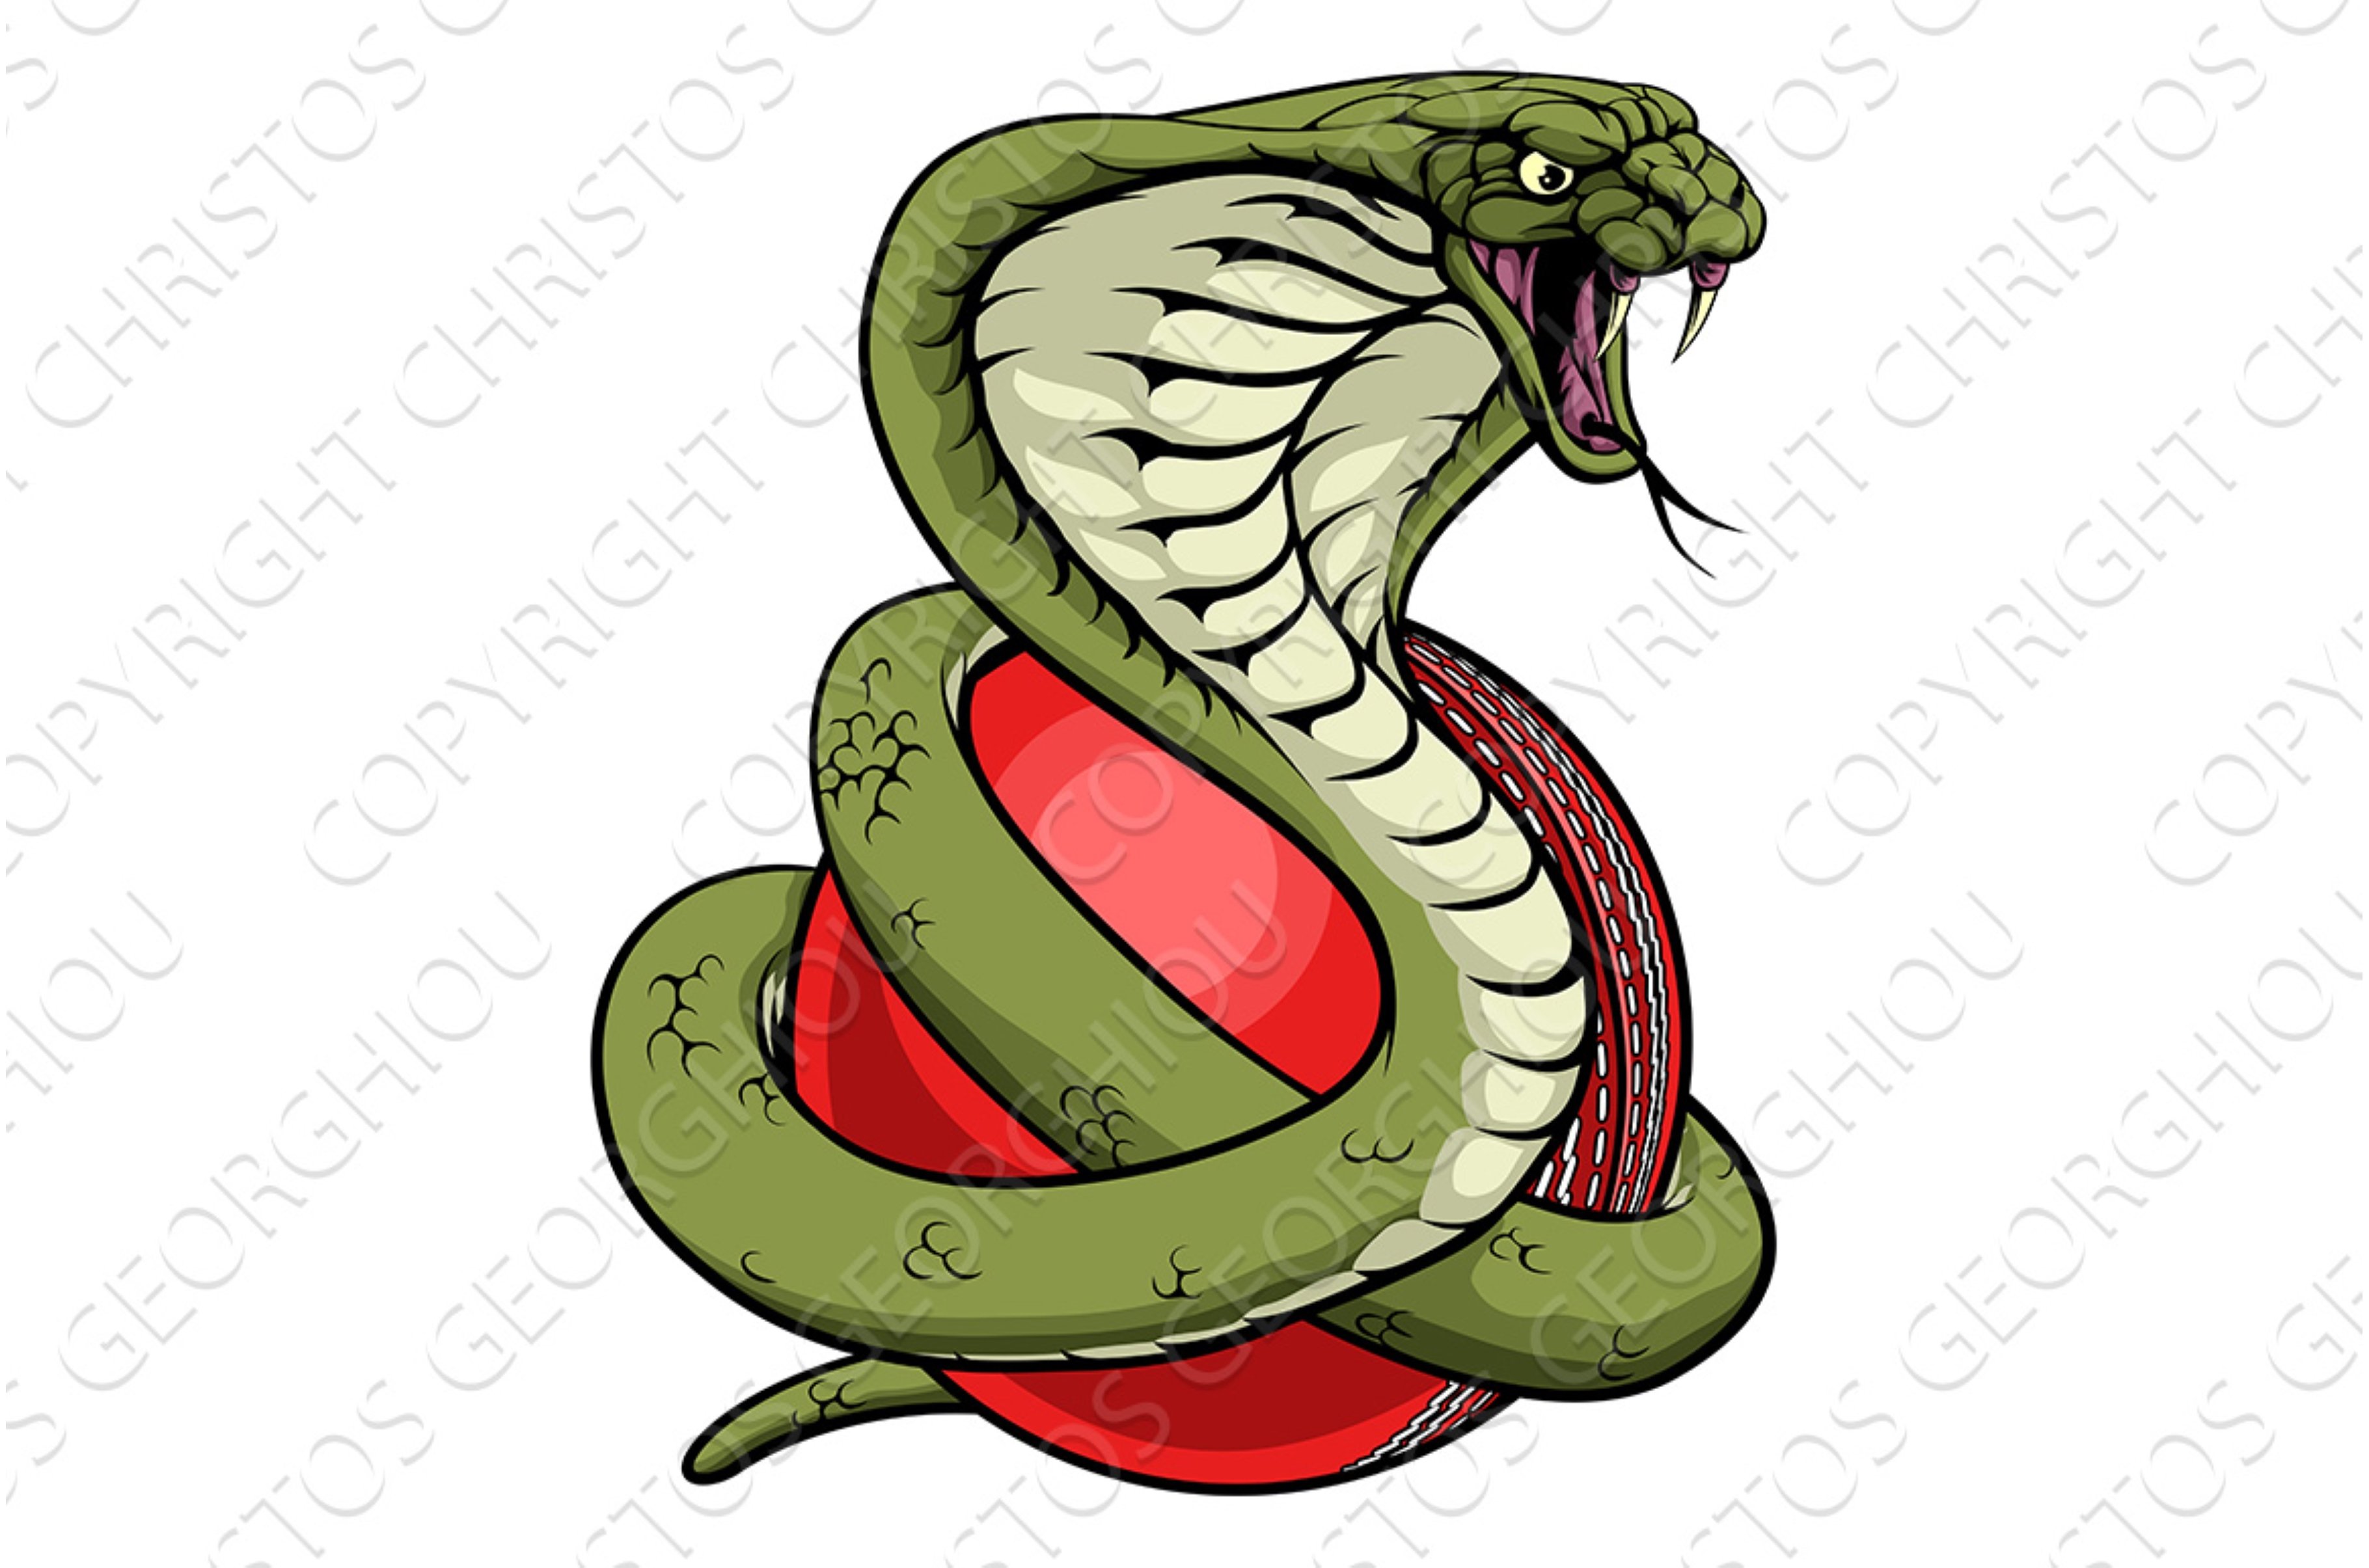 Cobra Snake Cricket Ball Animal cover image.